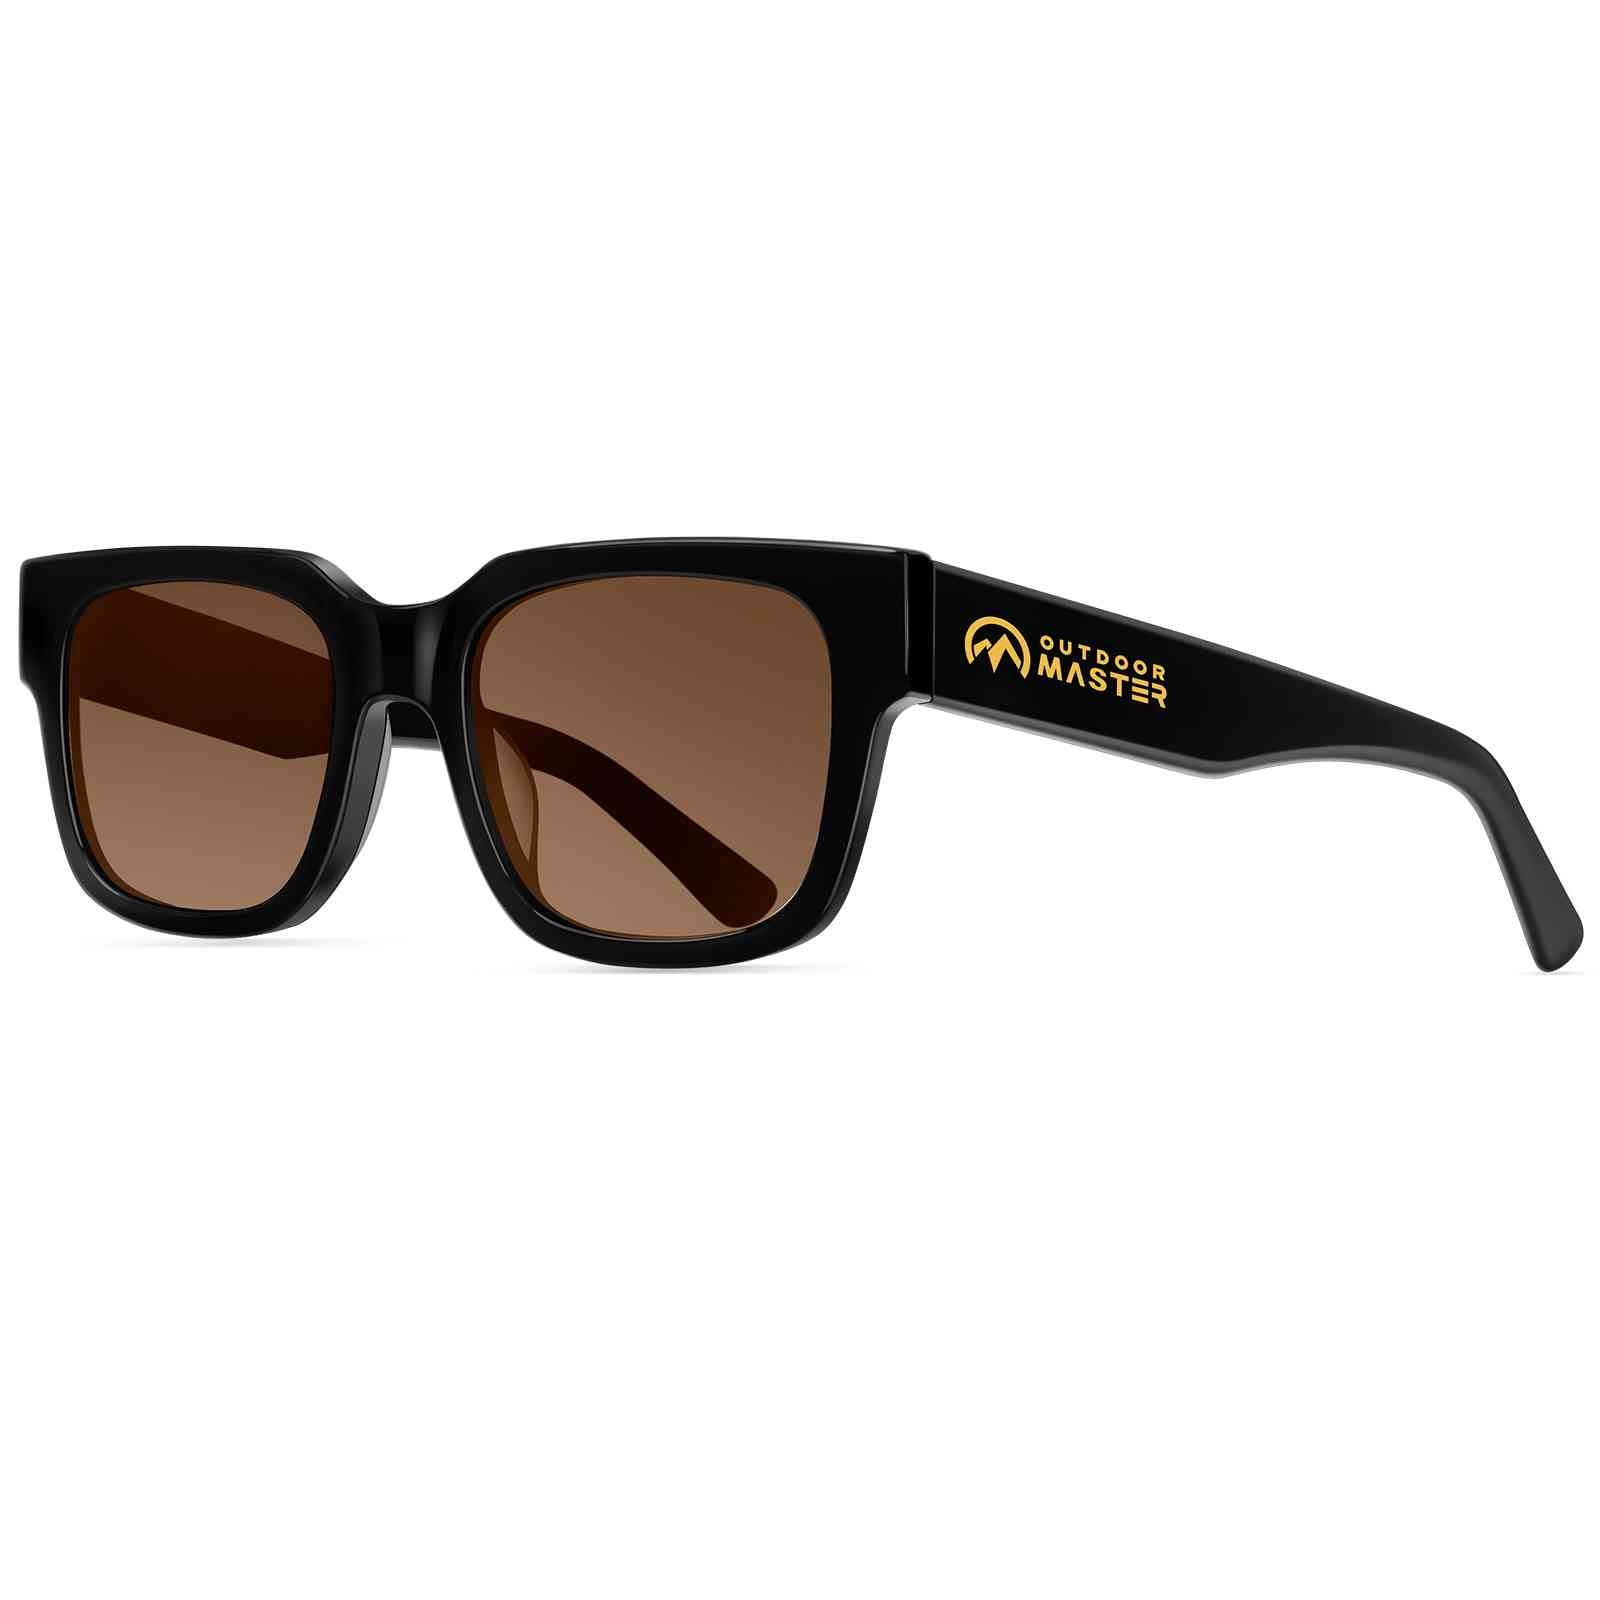 Raven Polarized Sport Sunglasses